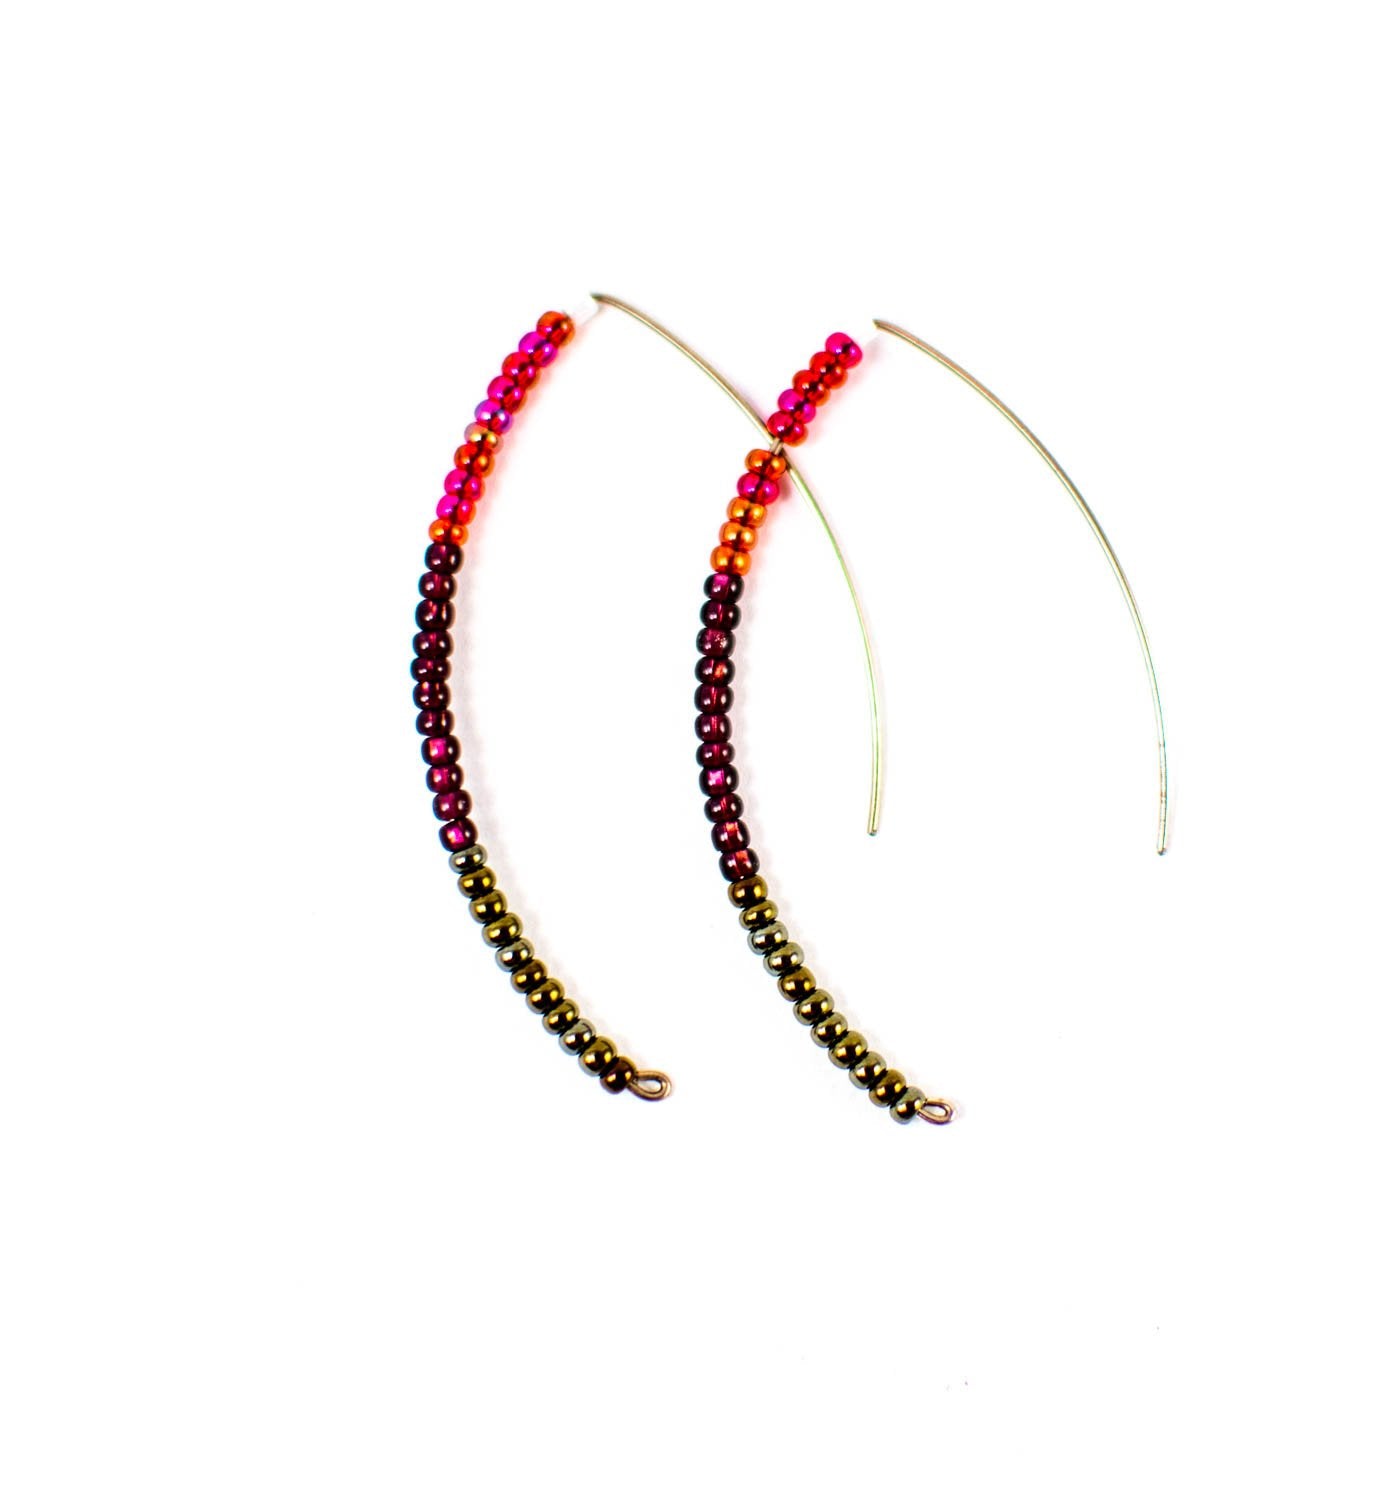 Lucia's World Emporium Fair Trade Handmade Beaded Styx Earrings from Guatemala in Berry